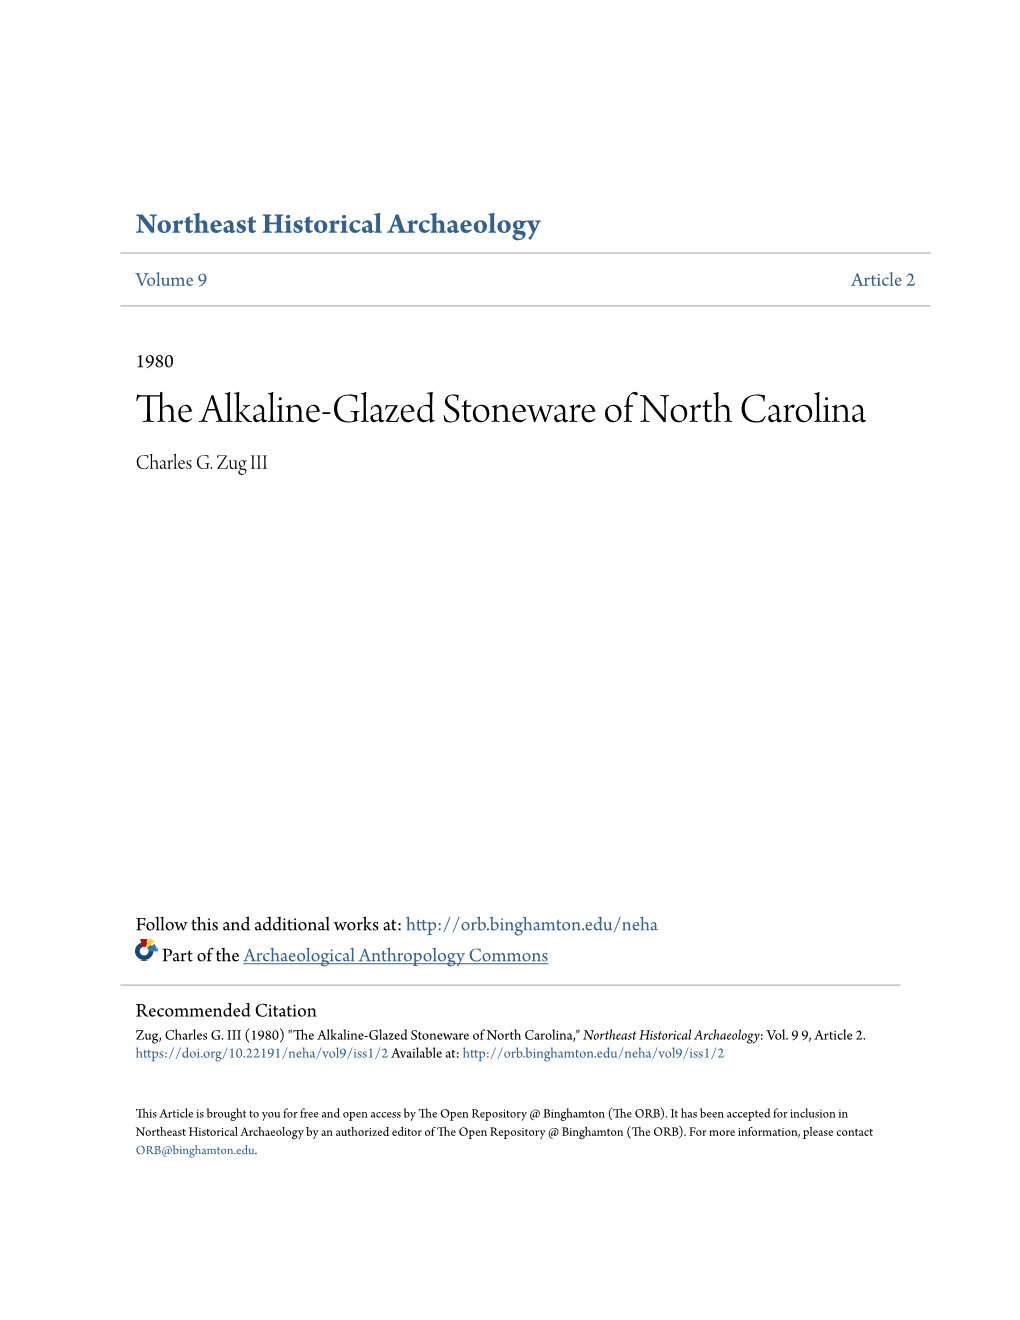 The Alkaline-Glazed Stoneware of North Carolina Charles G